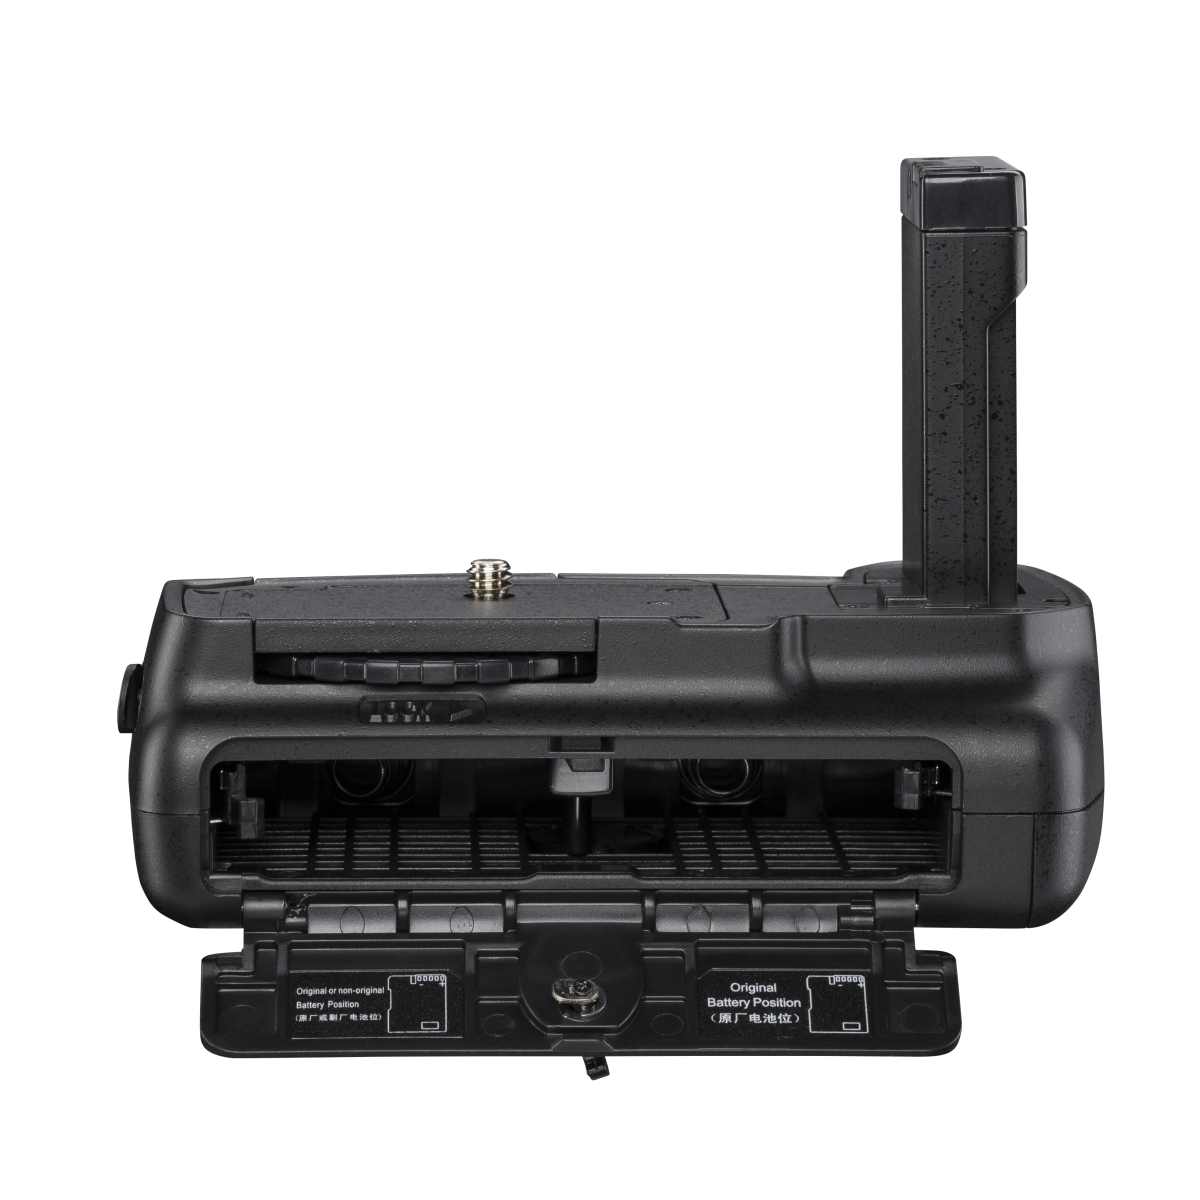 Walimex pro Battery Grip for Nikon D3100, D5100